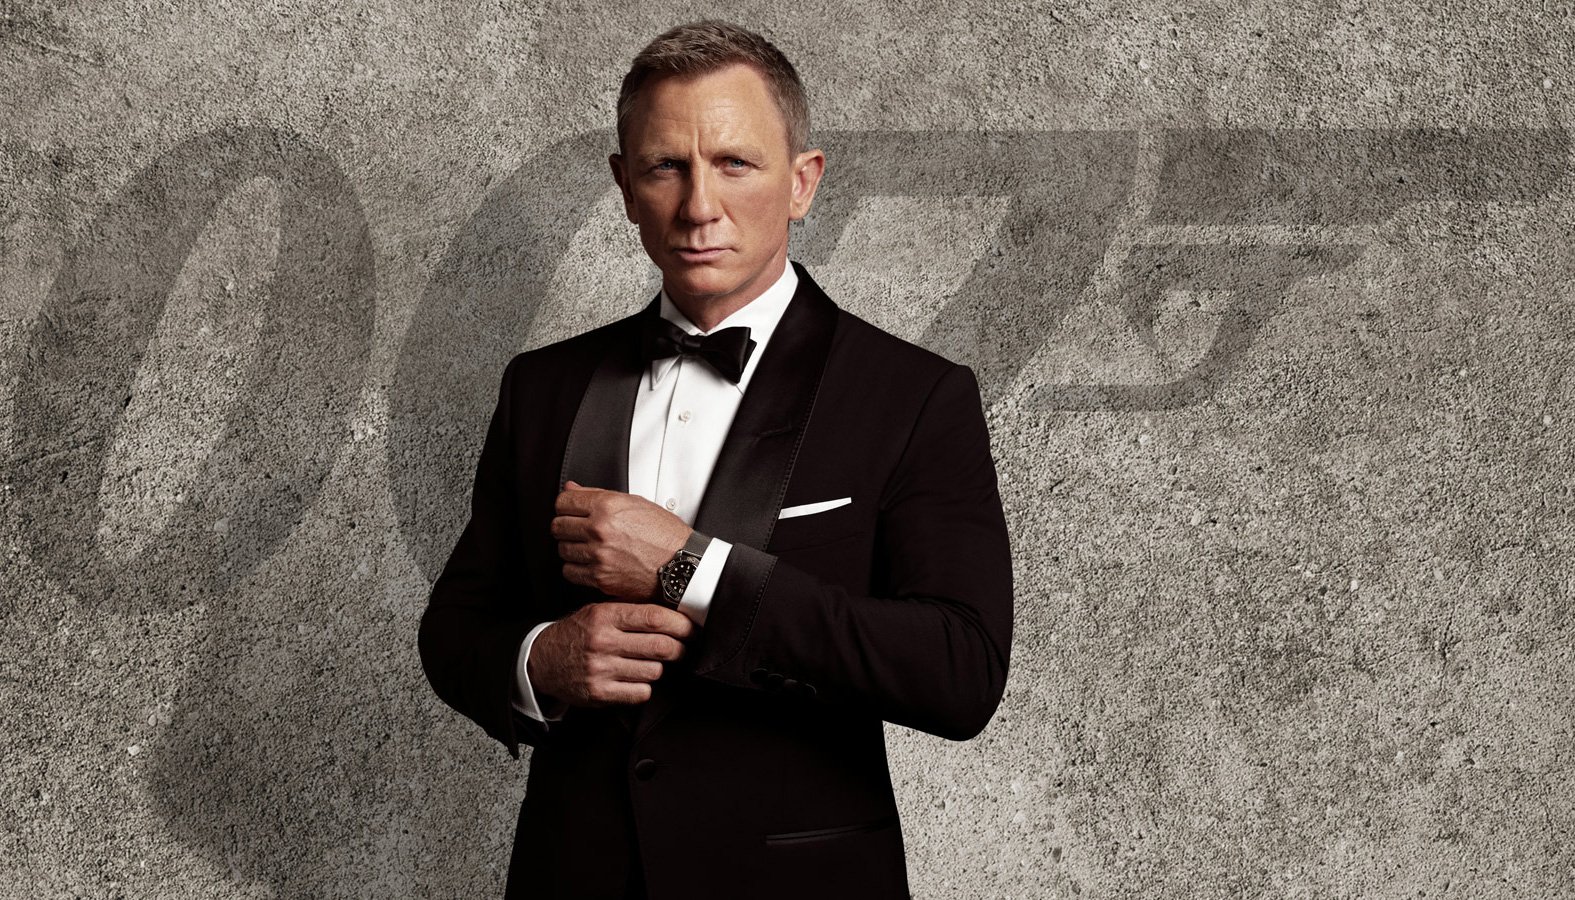 007: O grande motivo que impediu Henry Cavill de interpretar James